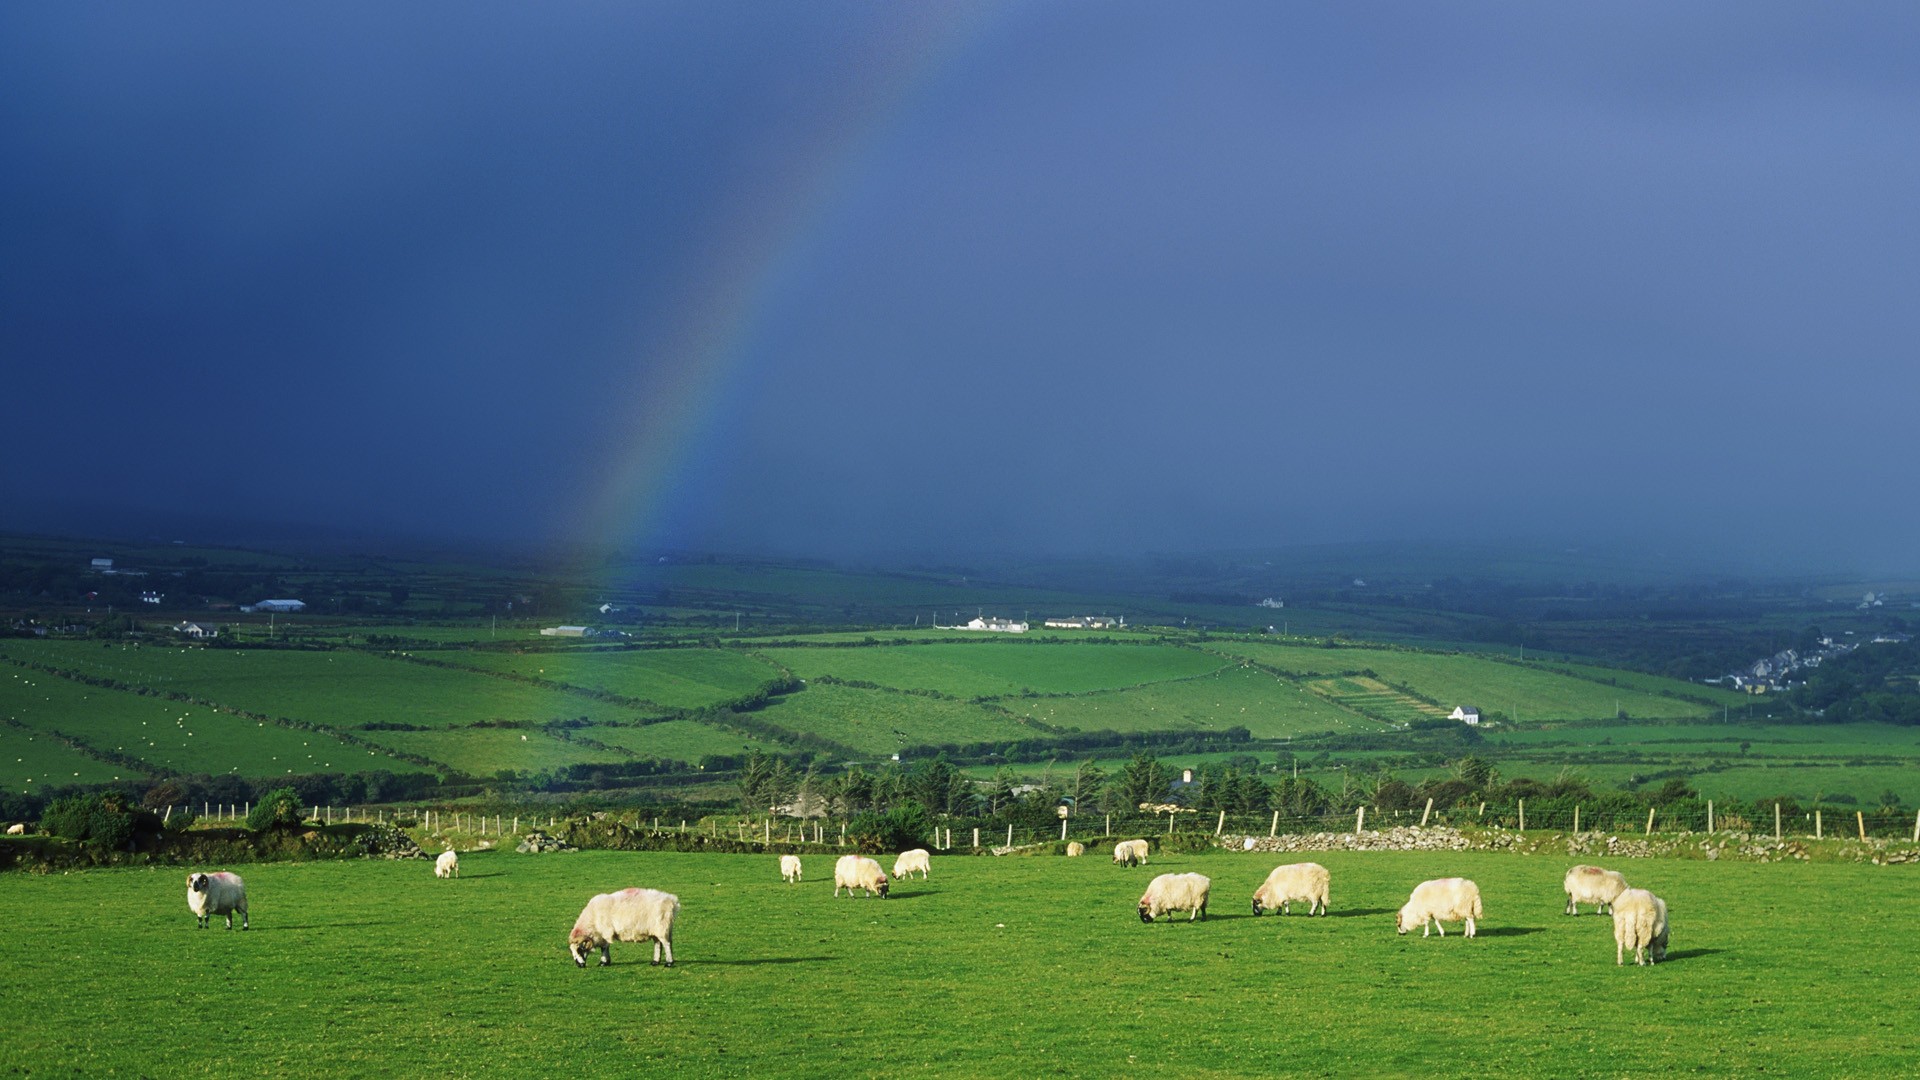 Sheep Ireland Wallpaper 1920x1080 Sheep Ireland Rainbows 1920x1080